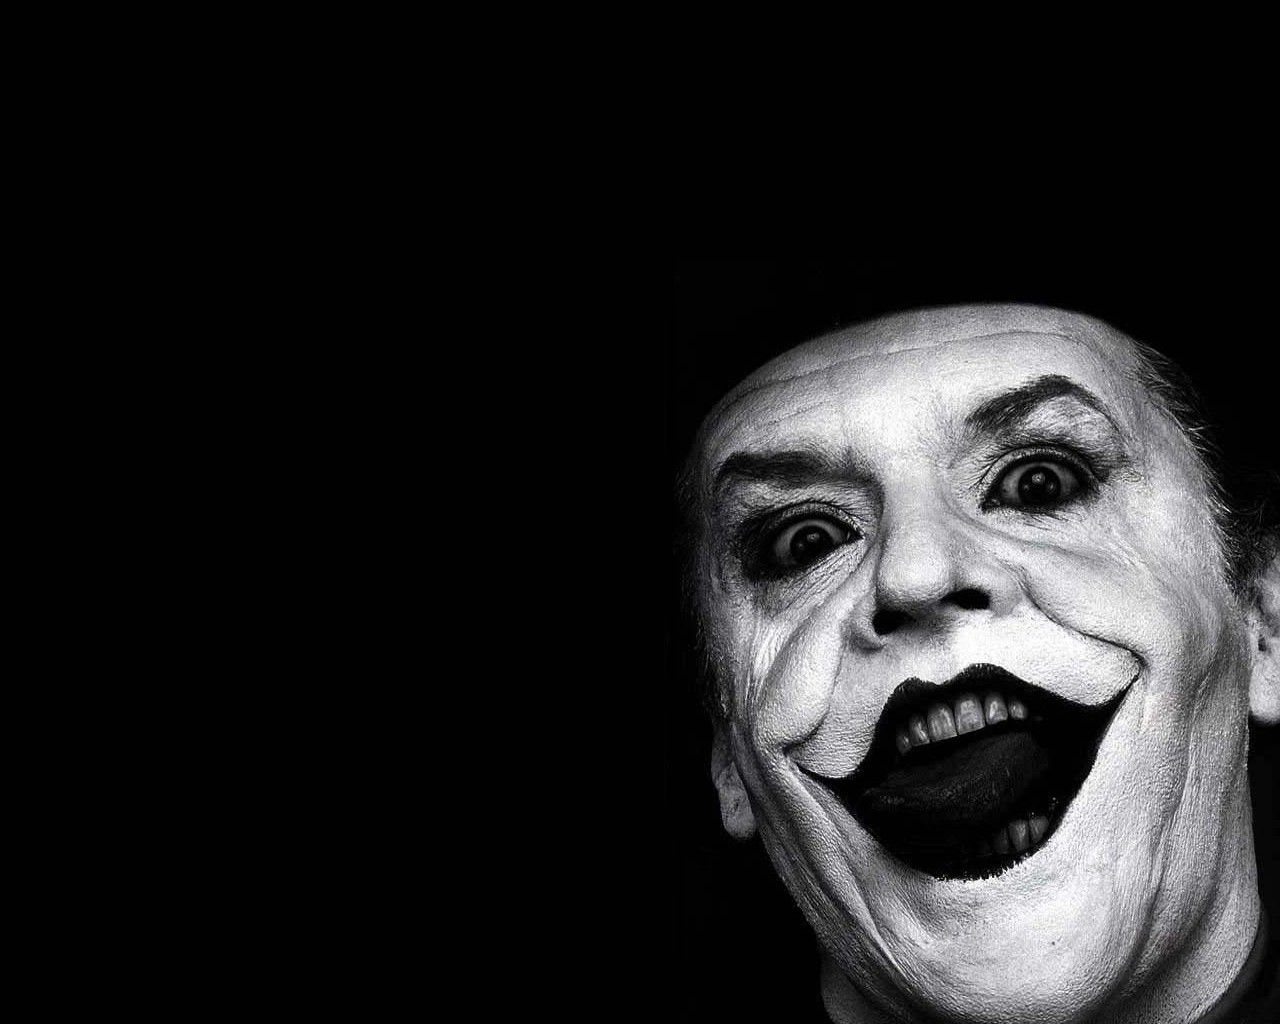 General 1280x1024 Joker Jack Nicholson monochrome Batman laughing face movies actor villains DC Comics